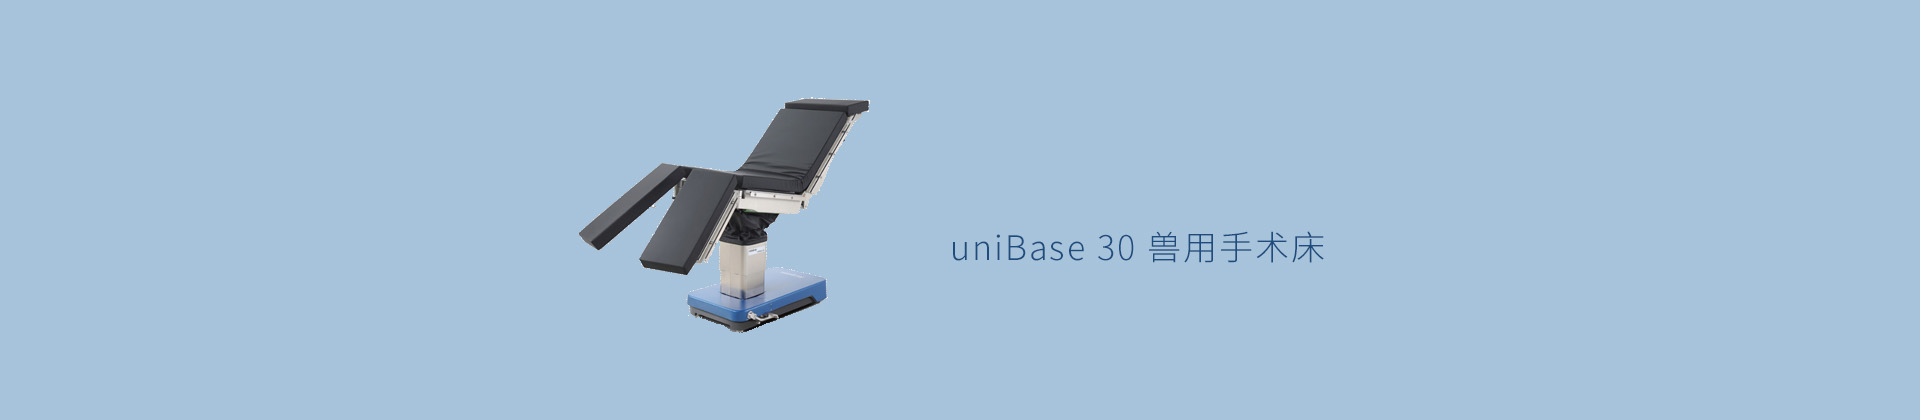 uniBase 30 兽用手术床